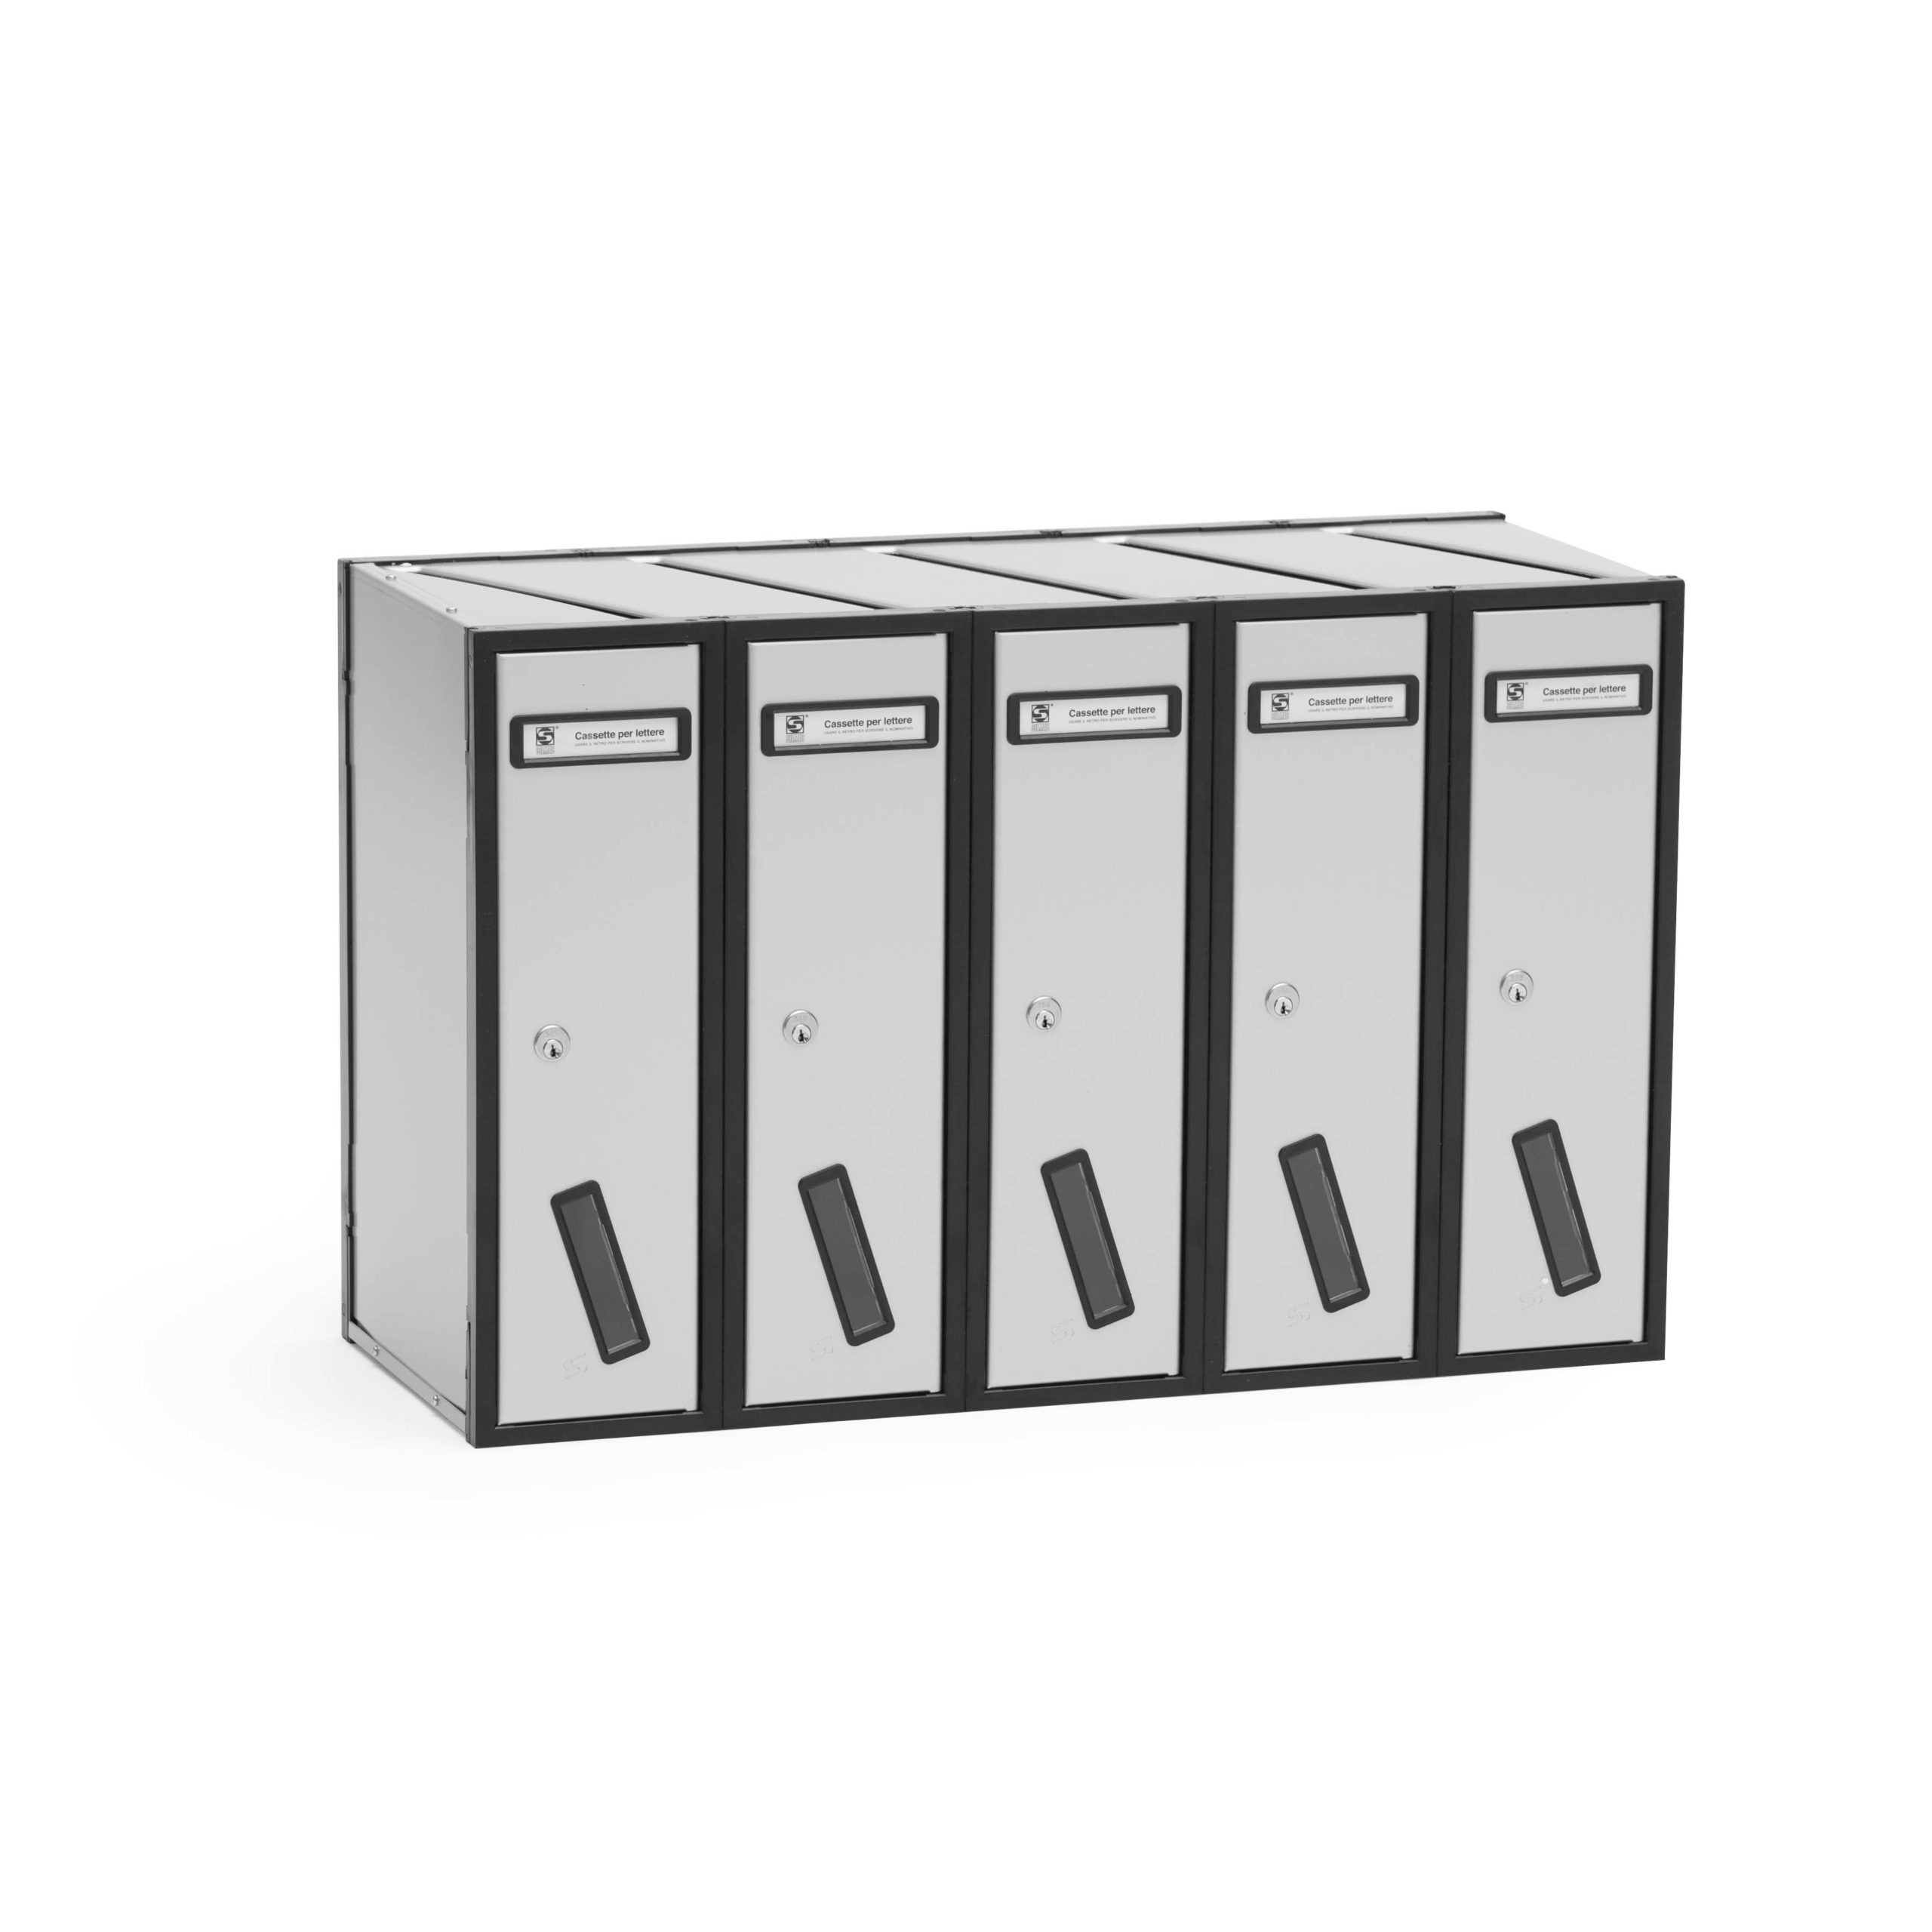 Standard modular letterbox units SC5V – 5 letterboxes